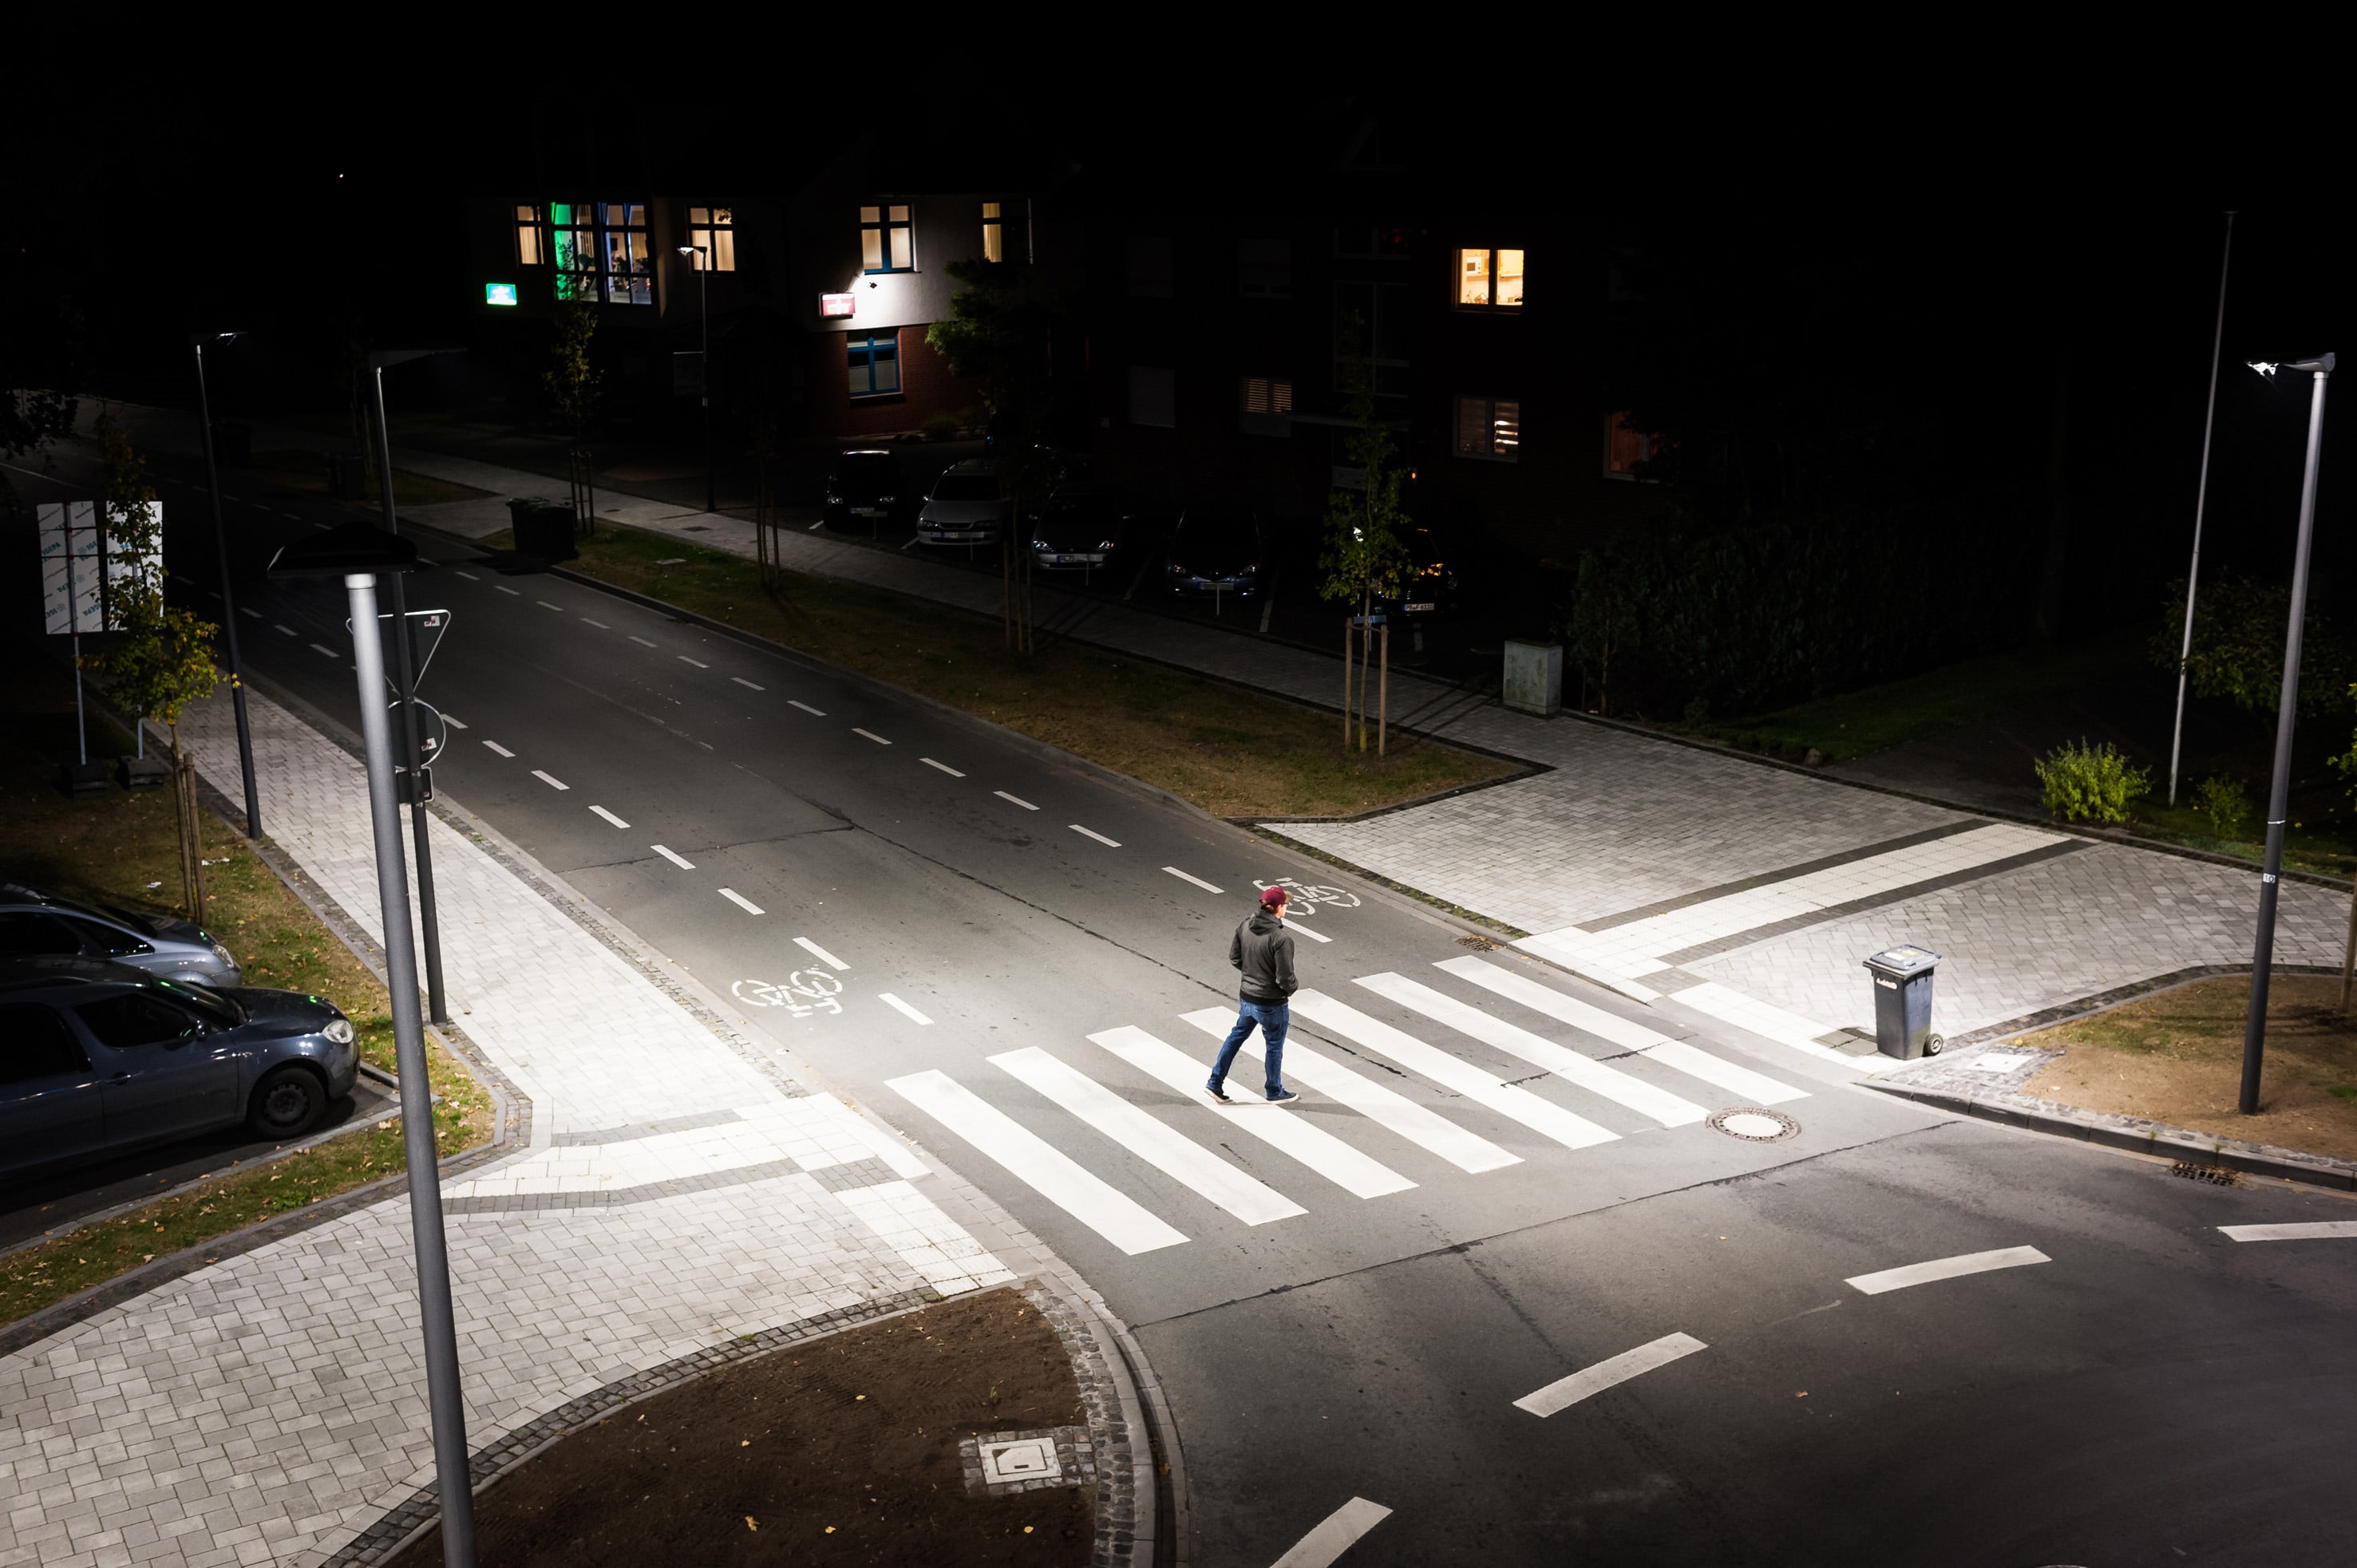 LED Street Lighting & Roadway Lighting - LED Street Lamps, Fixtures ...